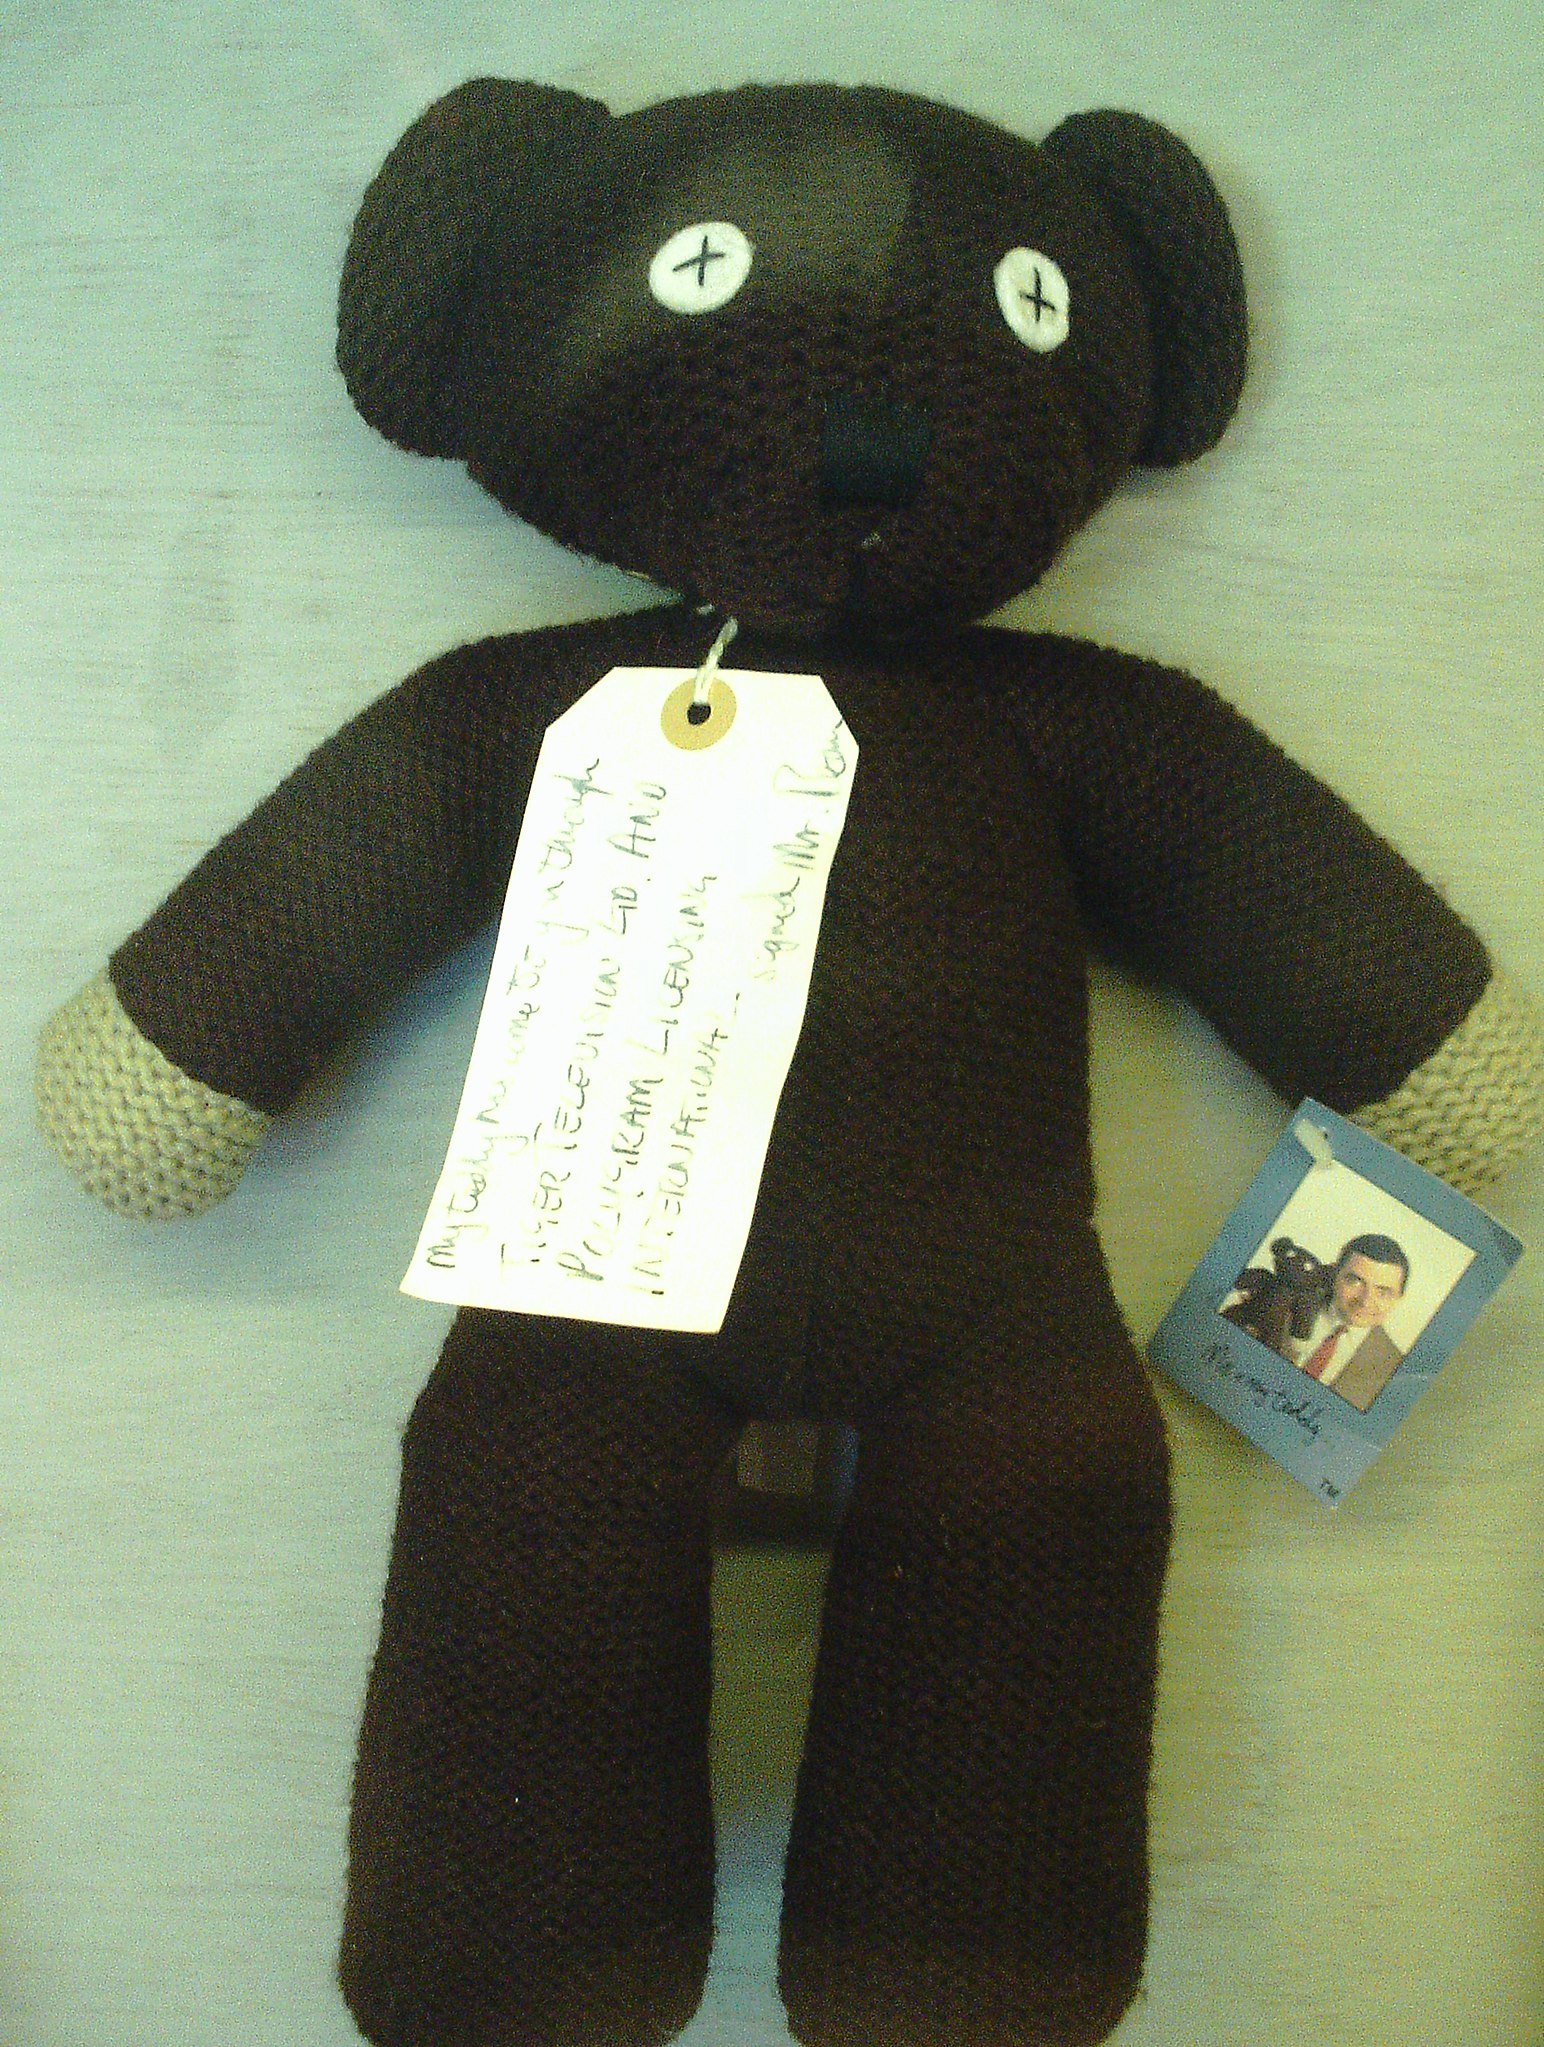 File:Mr Bean's teddy bear.jpg - Wikimedia Commons